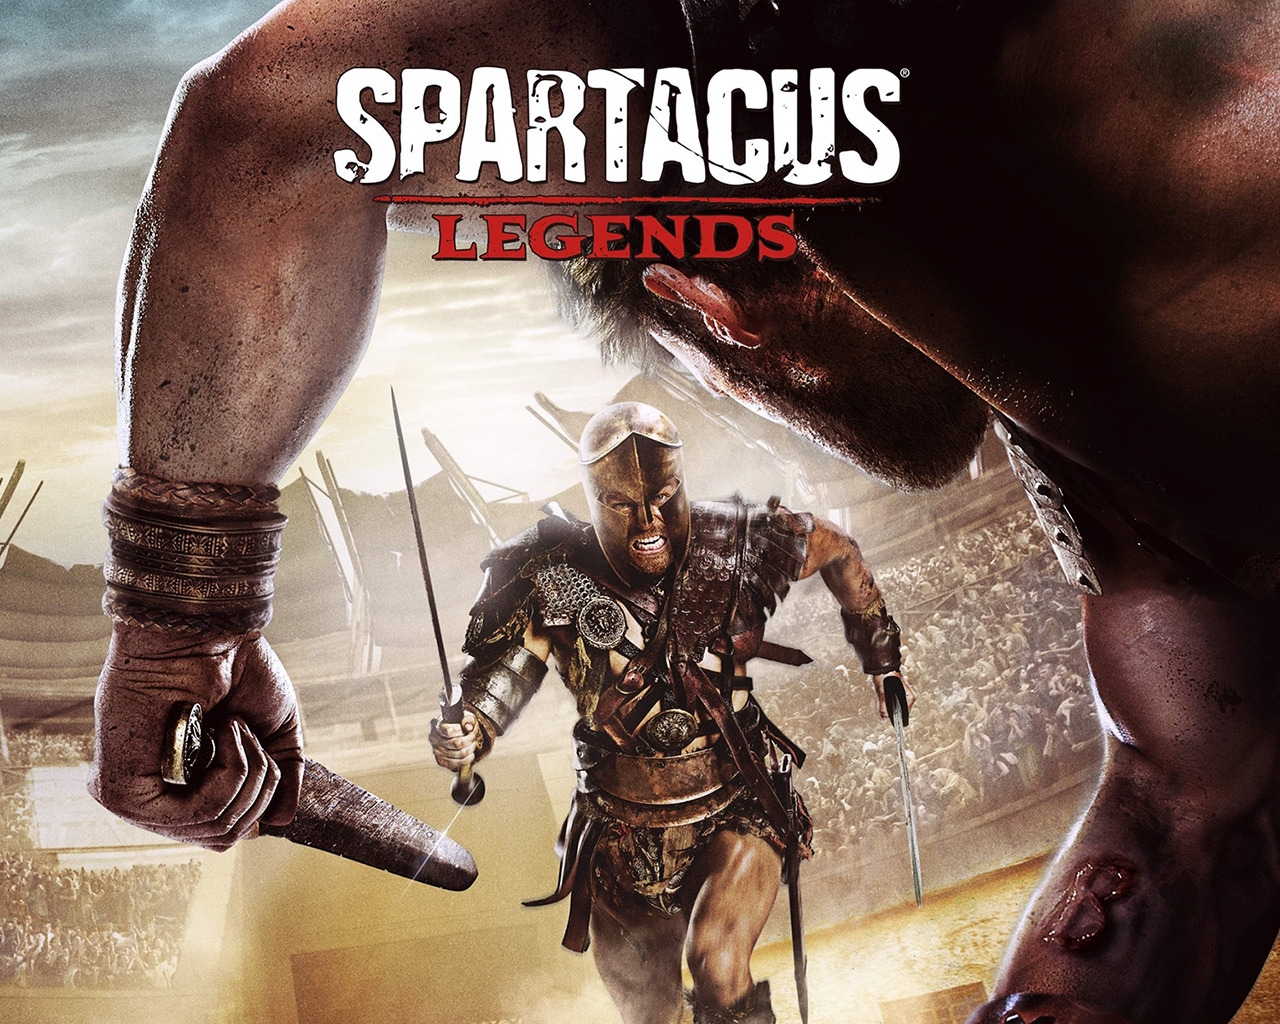 Spartacus Legends for 1280 x 1024 resolution